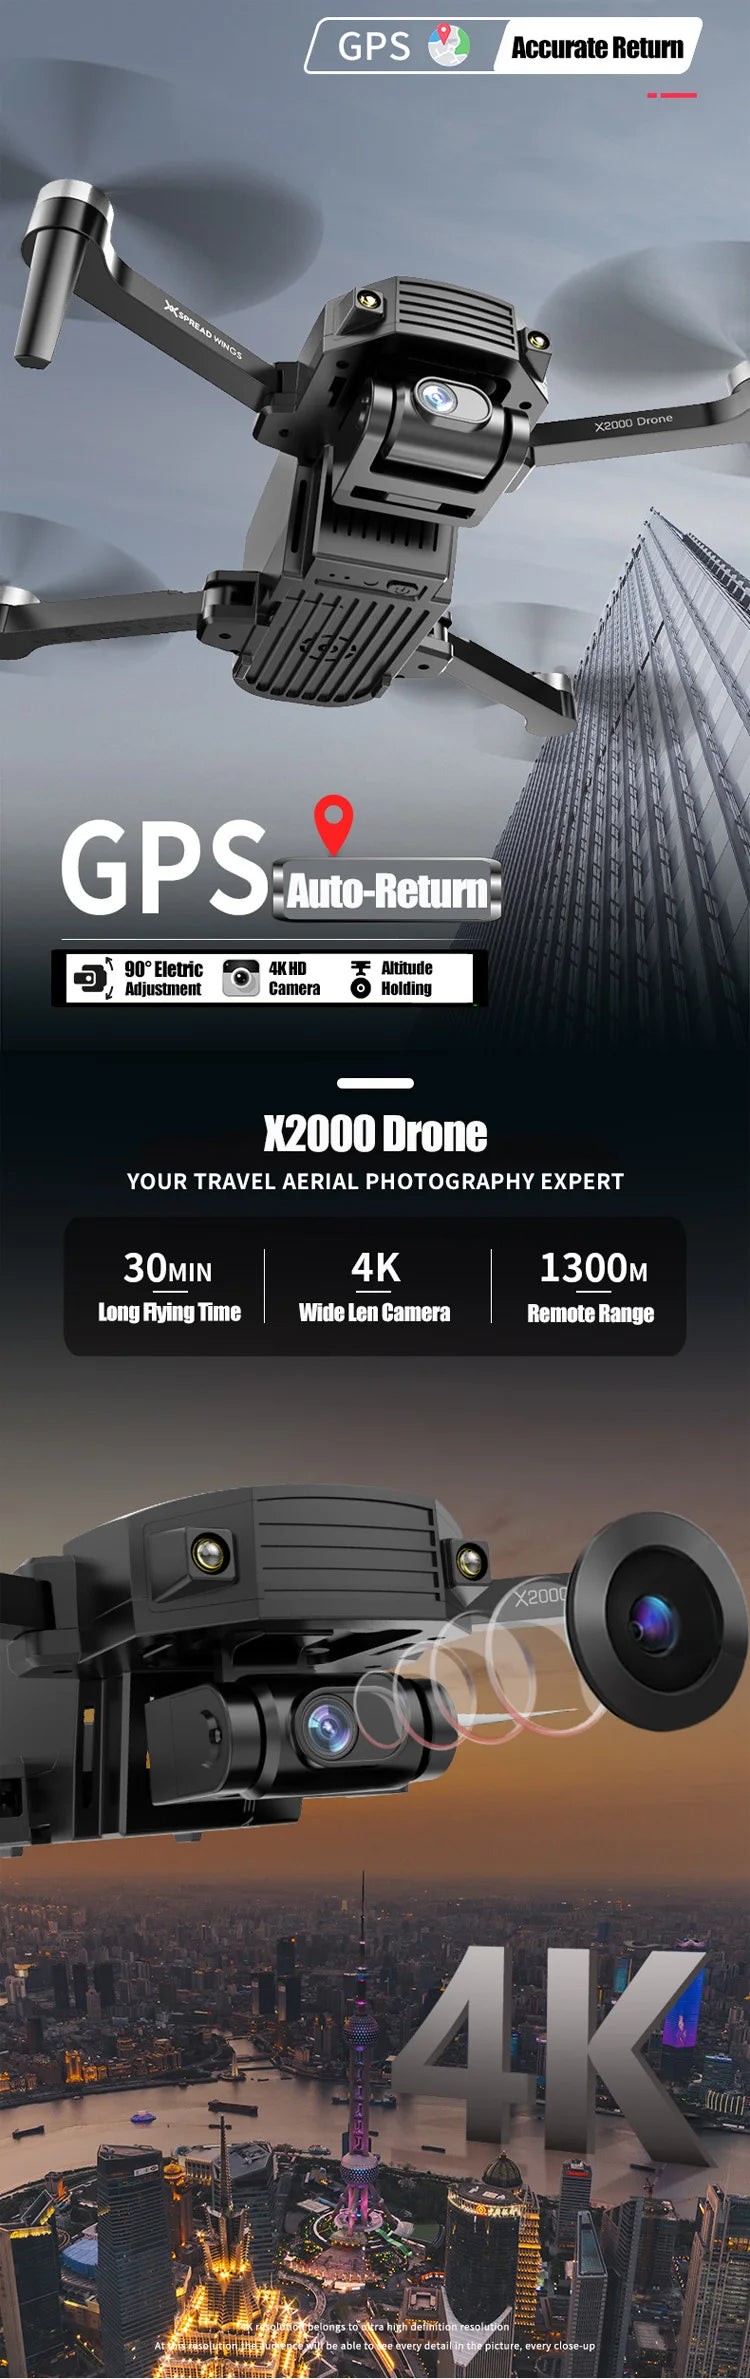 X2000 Drone, eletric 4khd atitude adjustnent camera